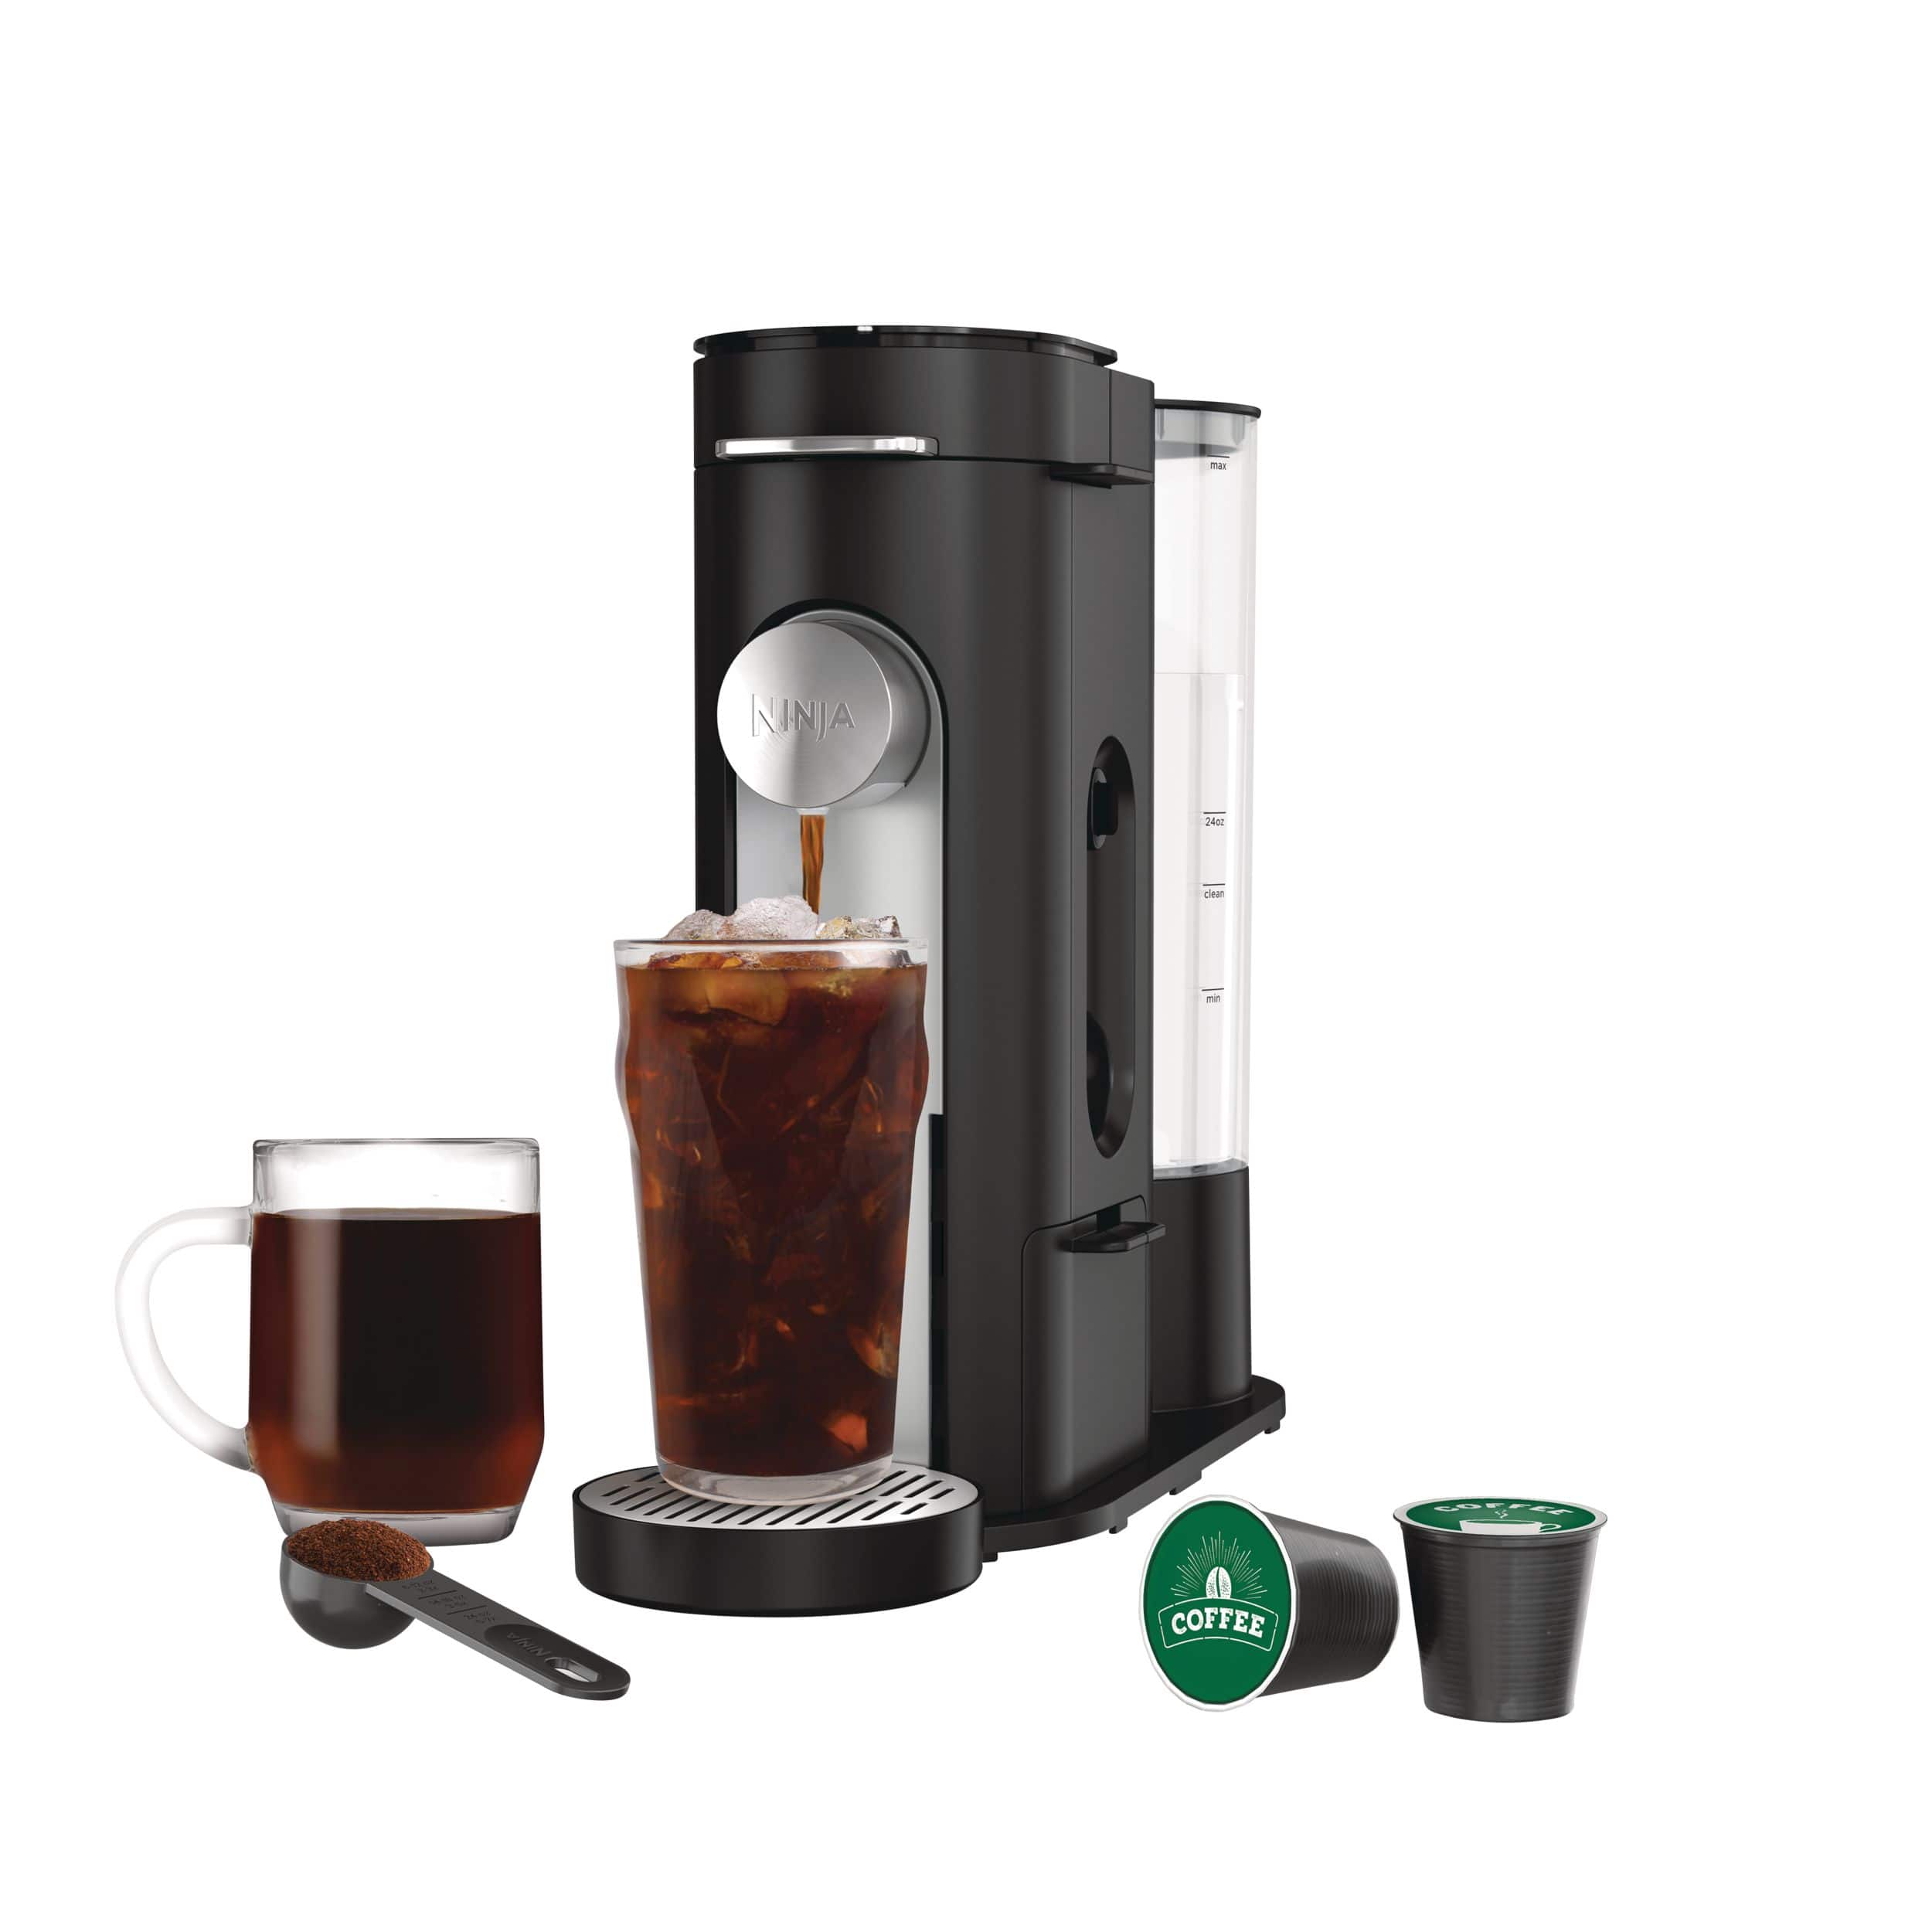 https://media-www.canadiantire.ca/product/living/kitchen/kitchen-appliances/0430322/ninja-single-serve-dual-brew-coffee-maker-grounds-pods-9fdbc95e-09e7-410f-8622-3d8c377c1c62-jpgrendition.jpg